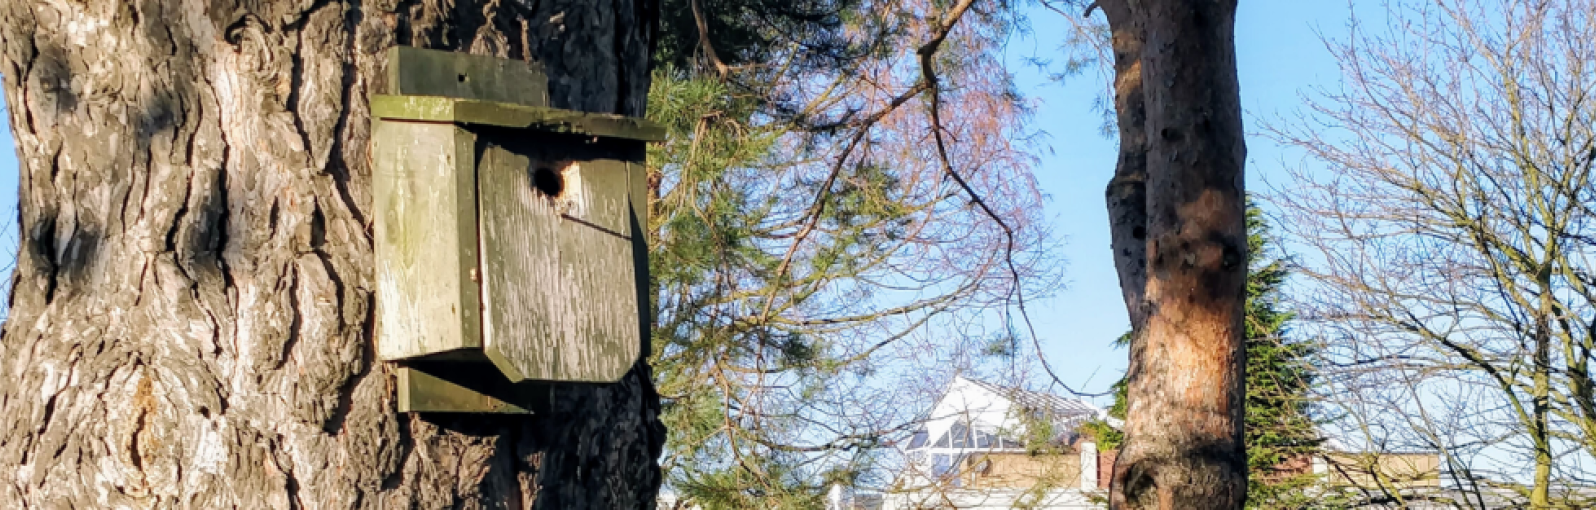 bird box and trees image